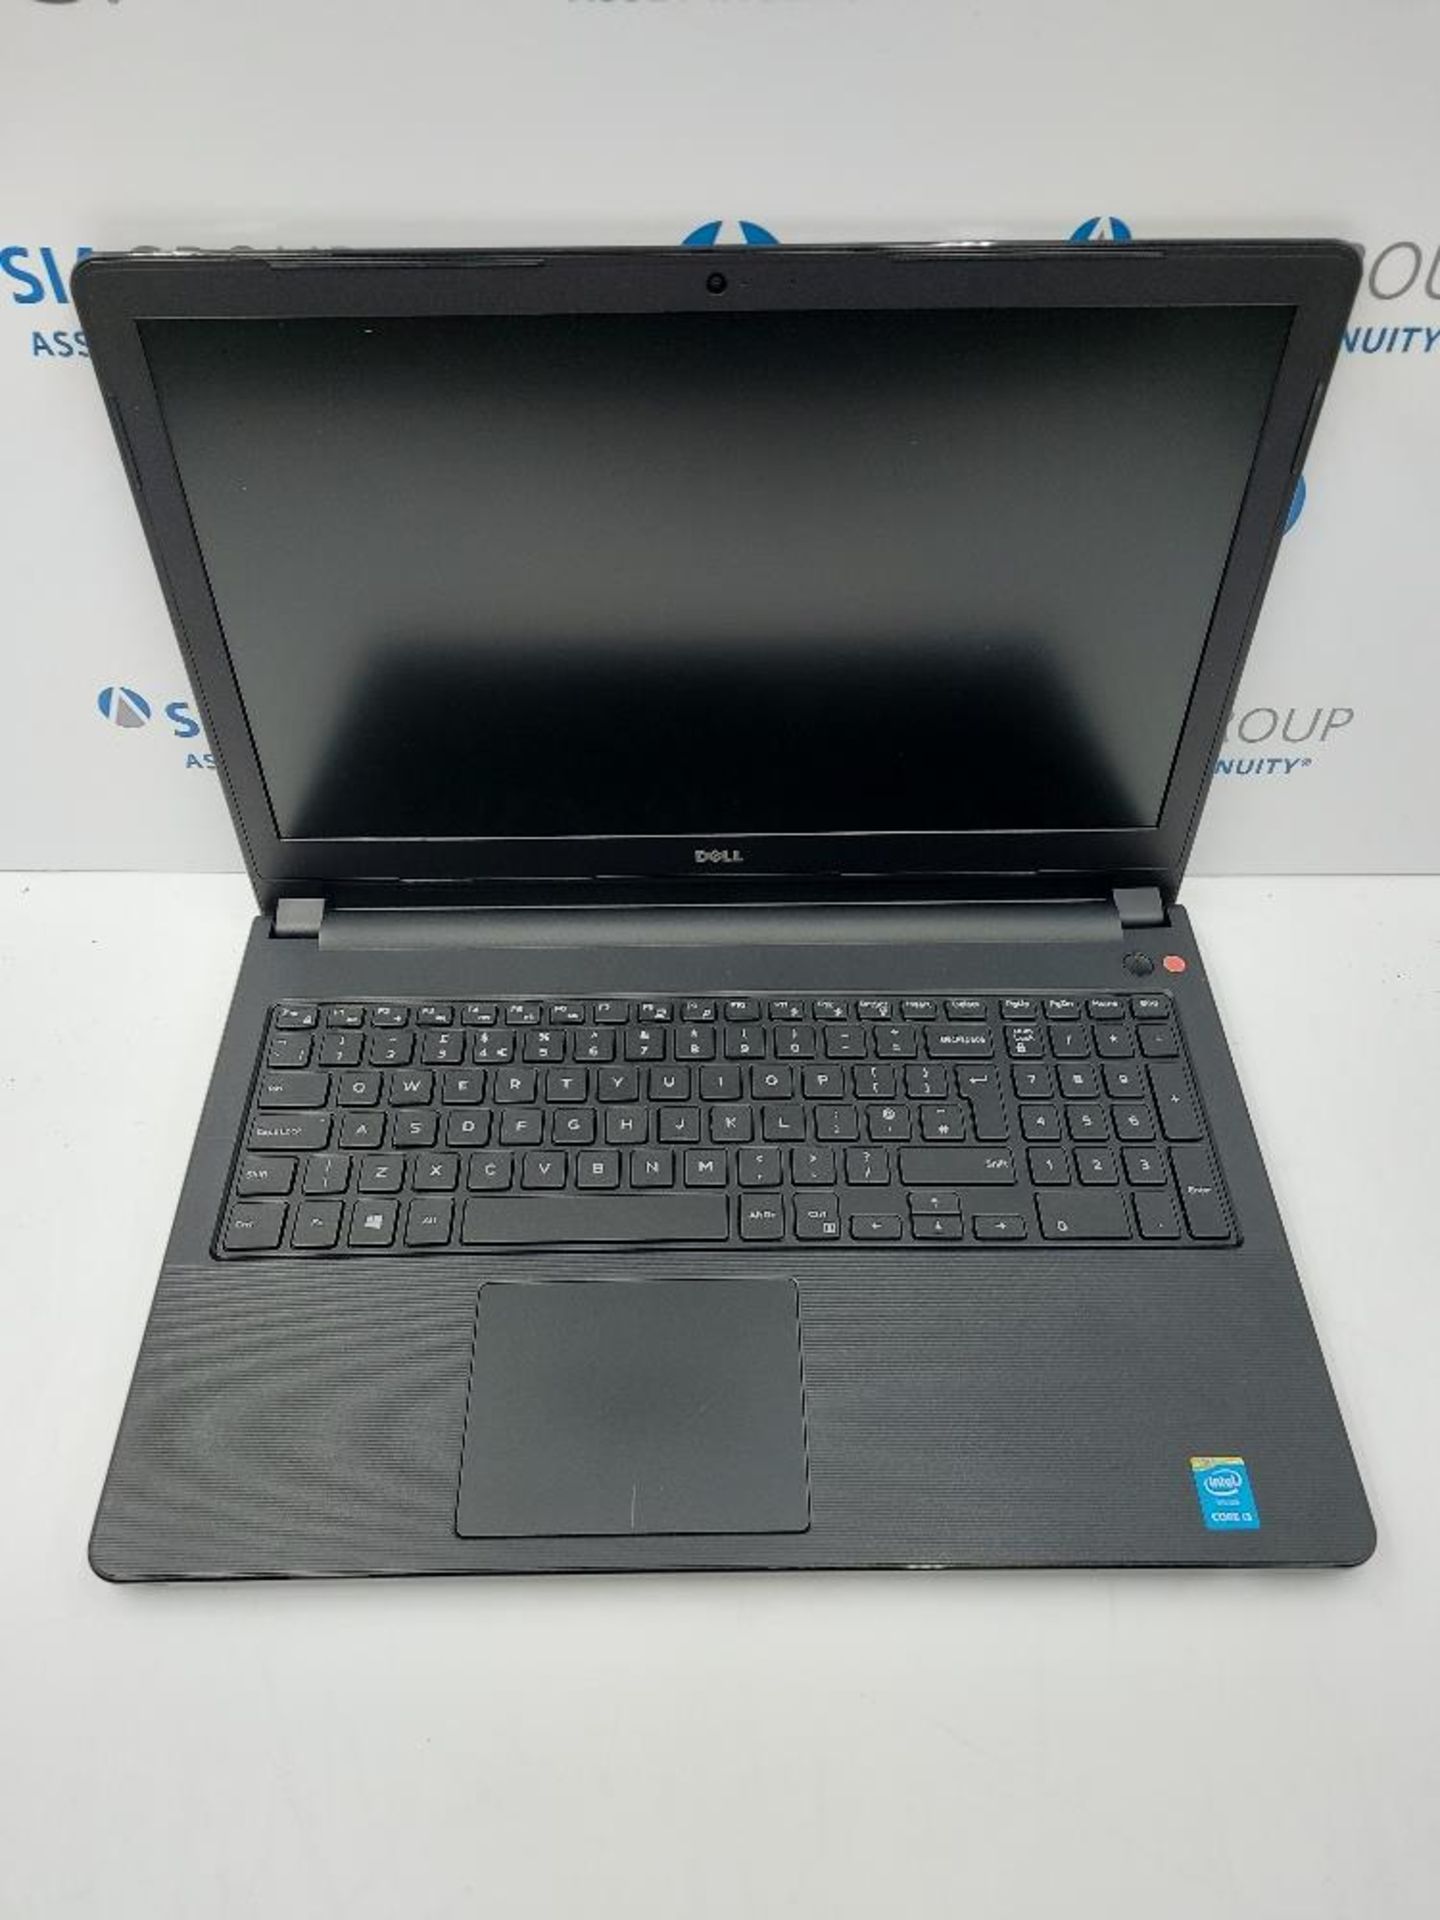 Dell Vostro Windows 7 Laptop with Peli Case - Image 3 of 7